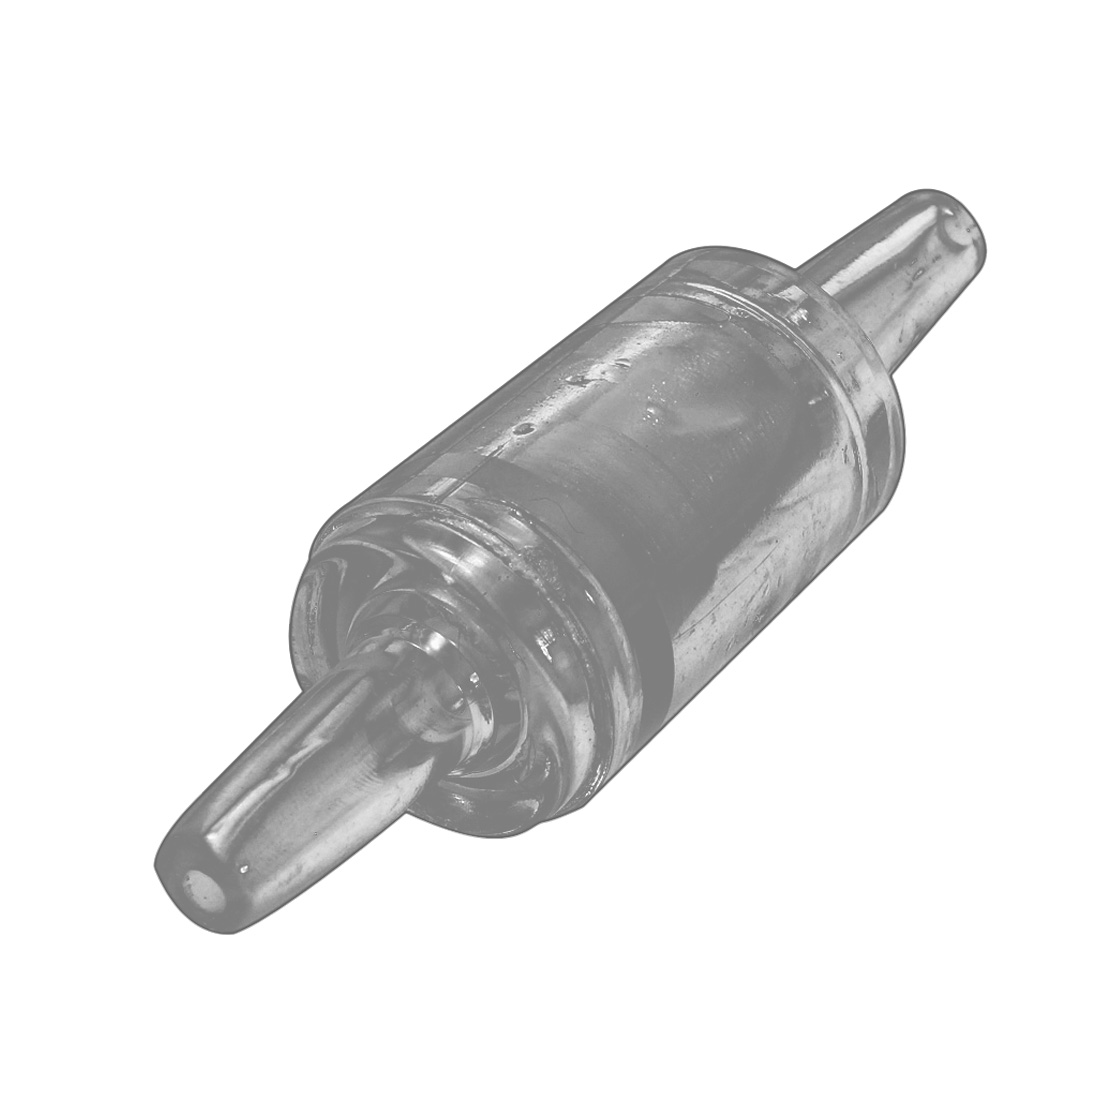 Kit Difusor CO2 cristal + tubo U cristal + Valvula antiretorno + ventosa